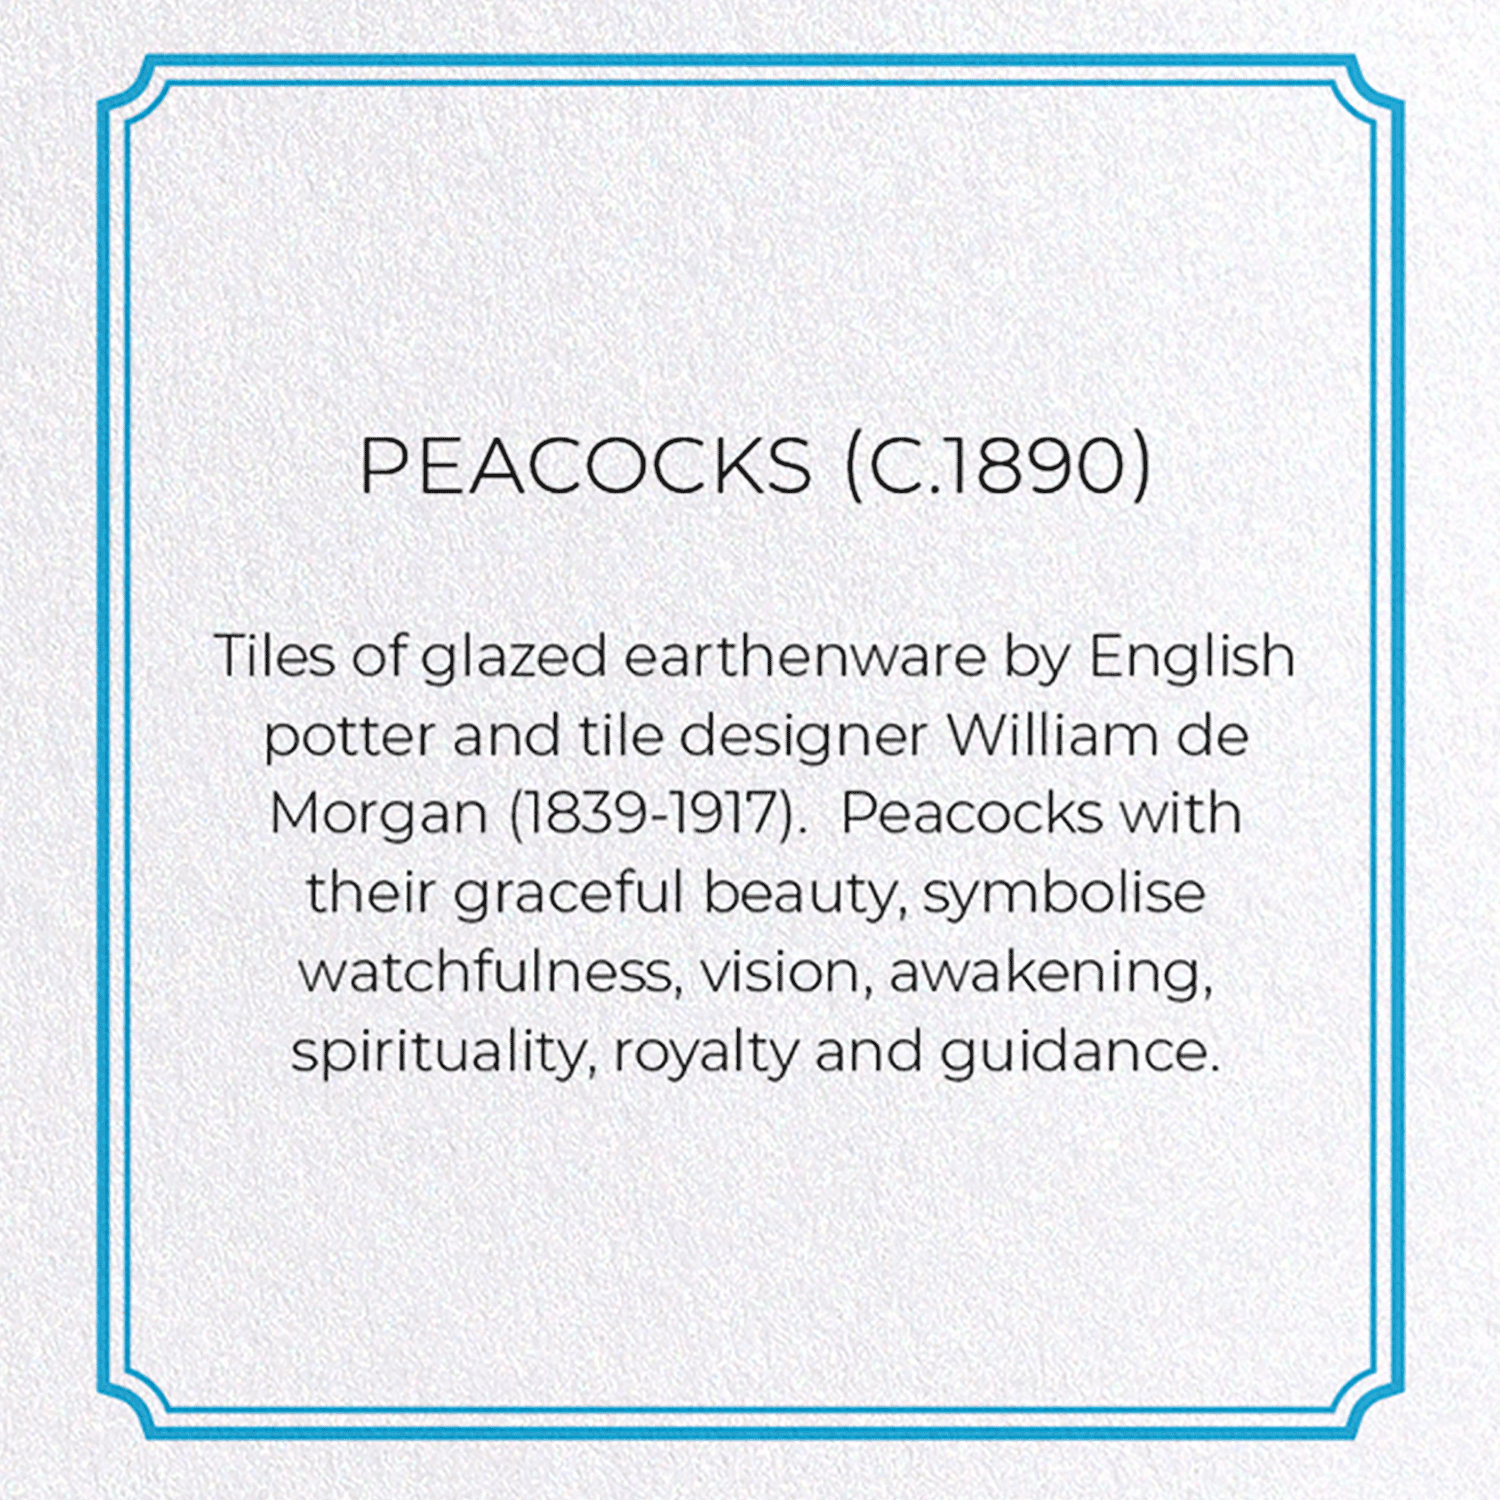 PEACOCKS (C.1890)